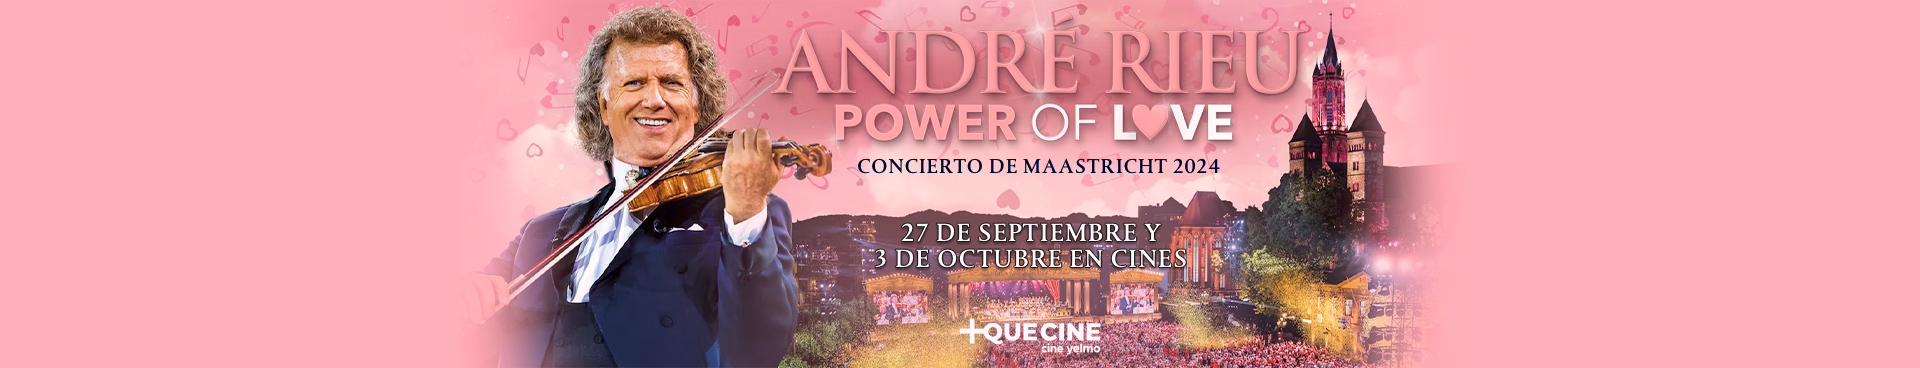 André Rieu 2024 Concierto Maastricht Power of Love